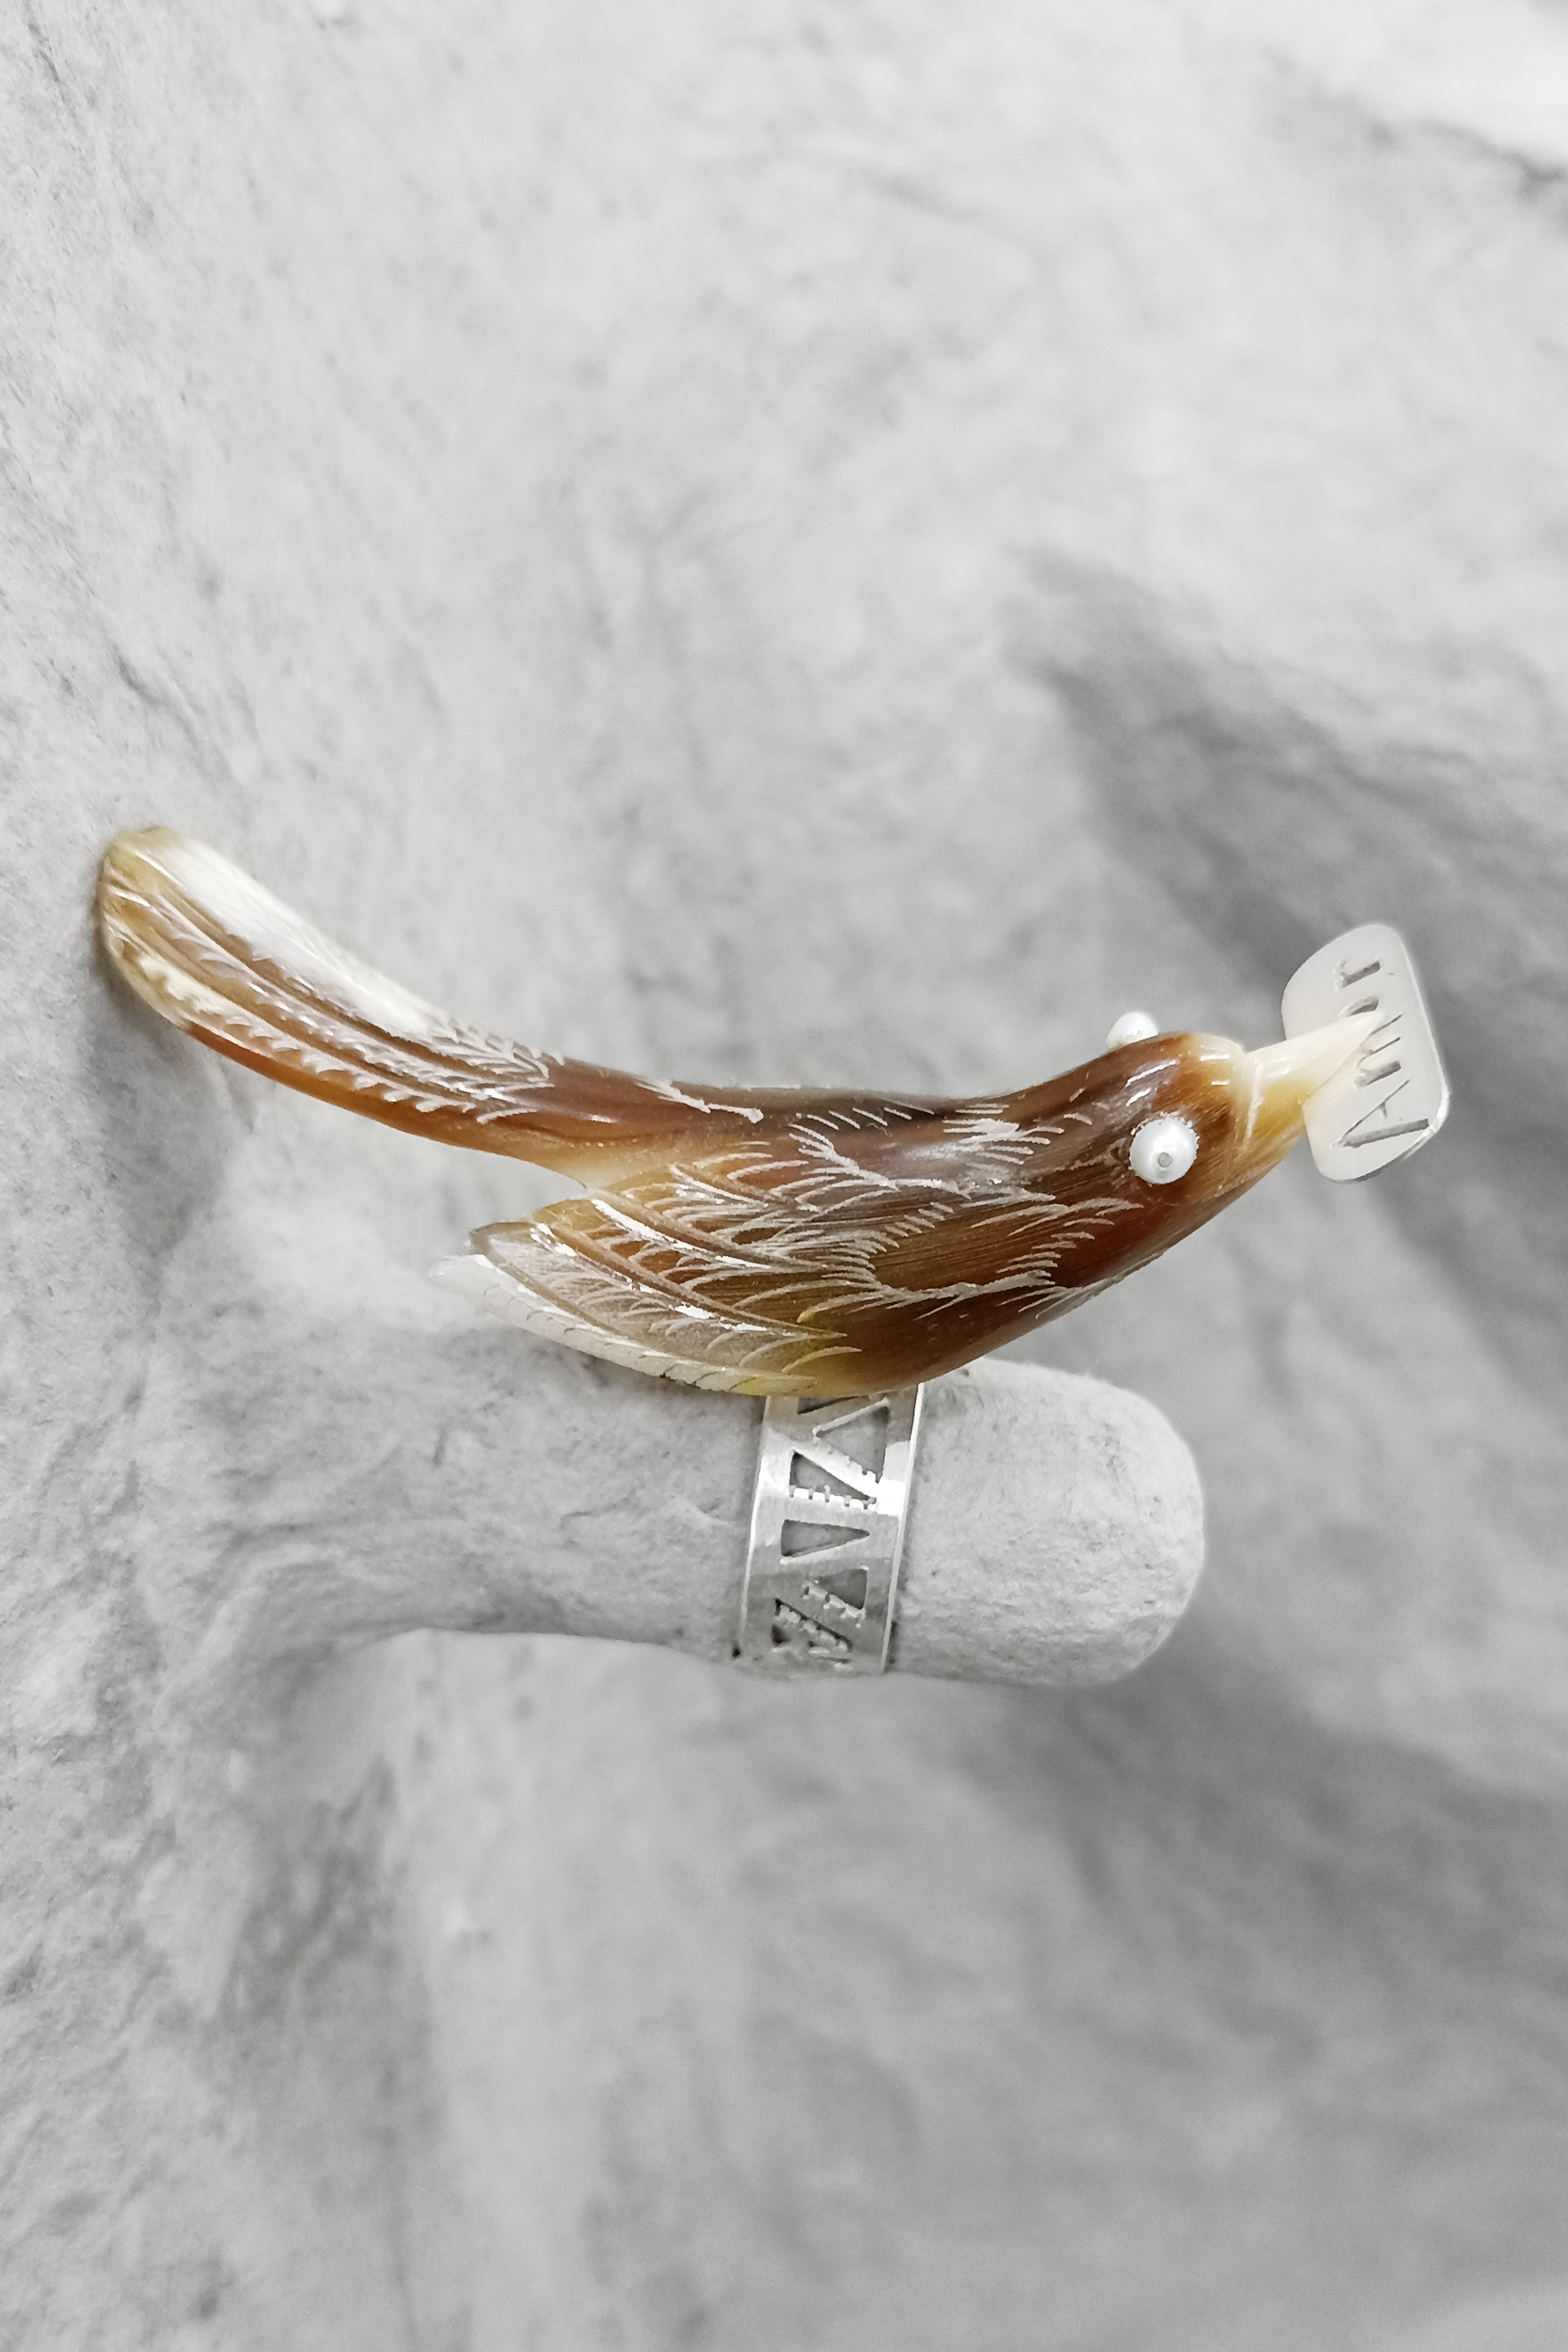 10 Ulrike Johannsen, Amor, 2022. Horn, pearls and silver, 4x7x2,5 cm